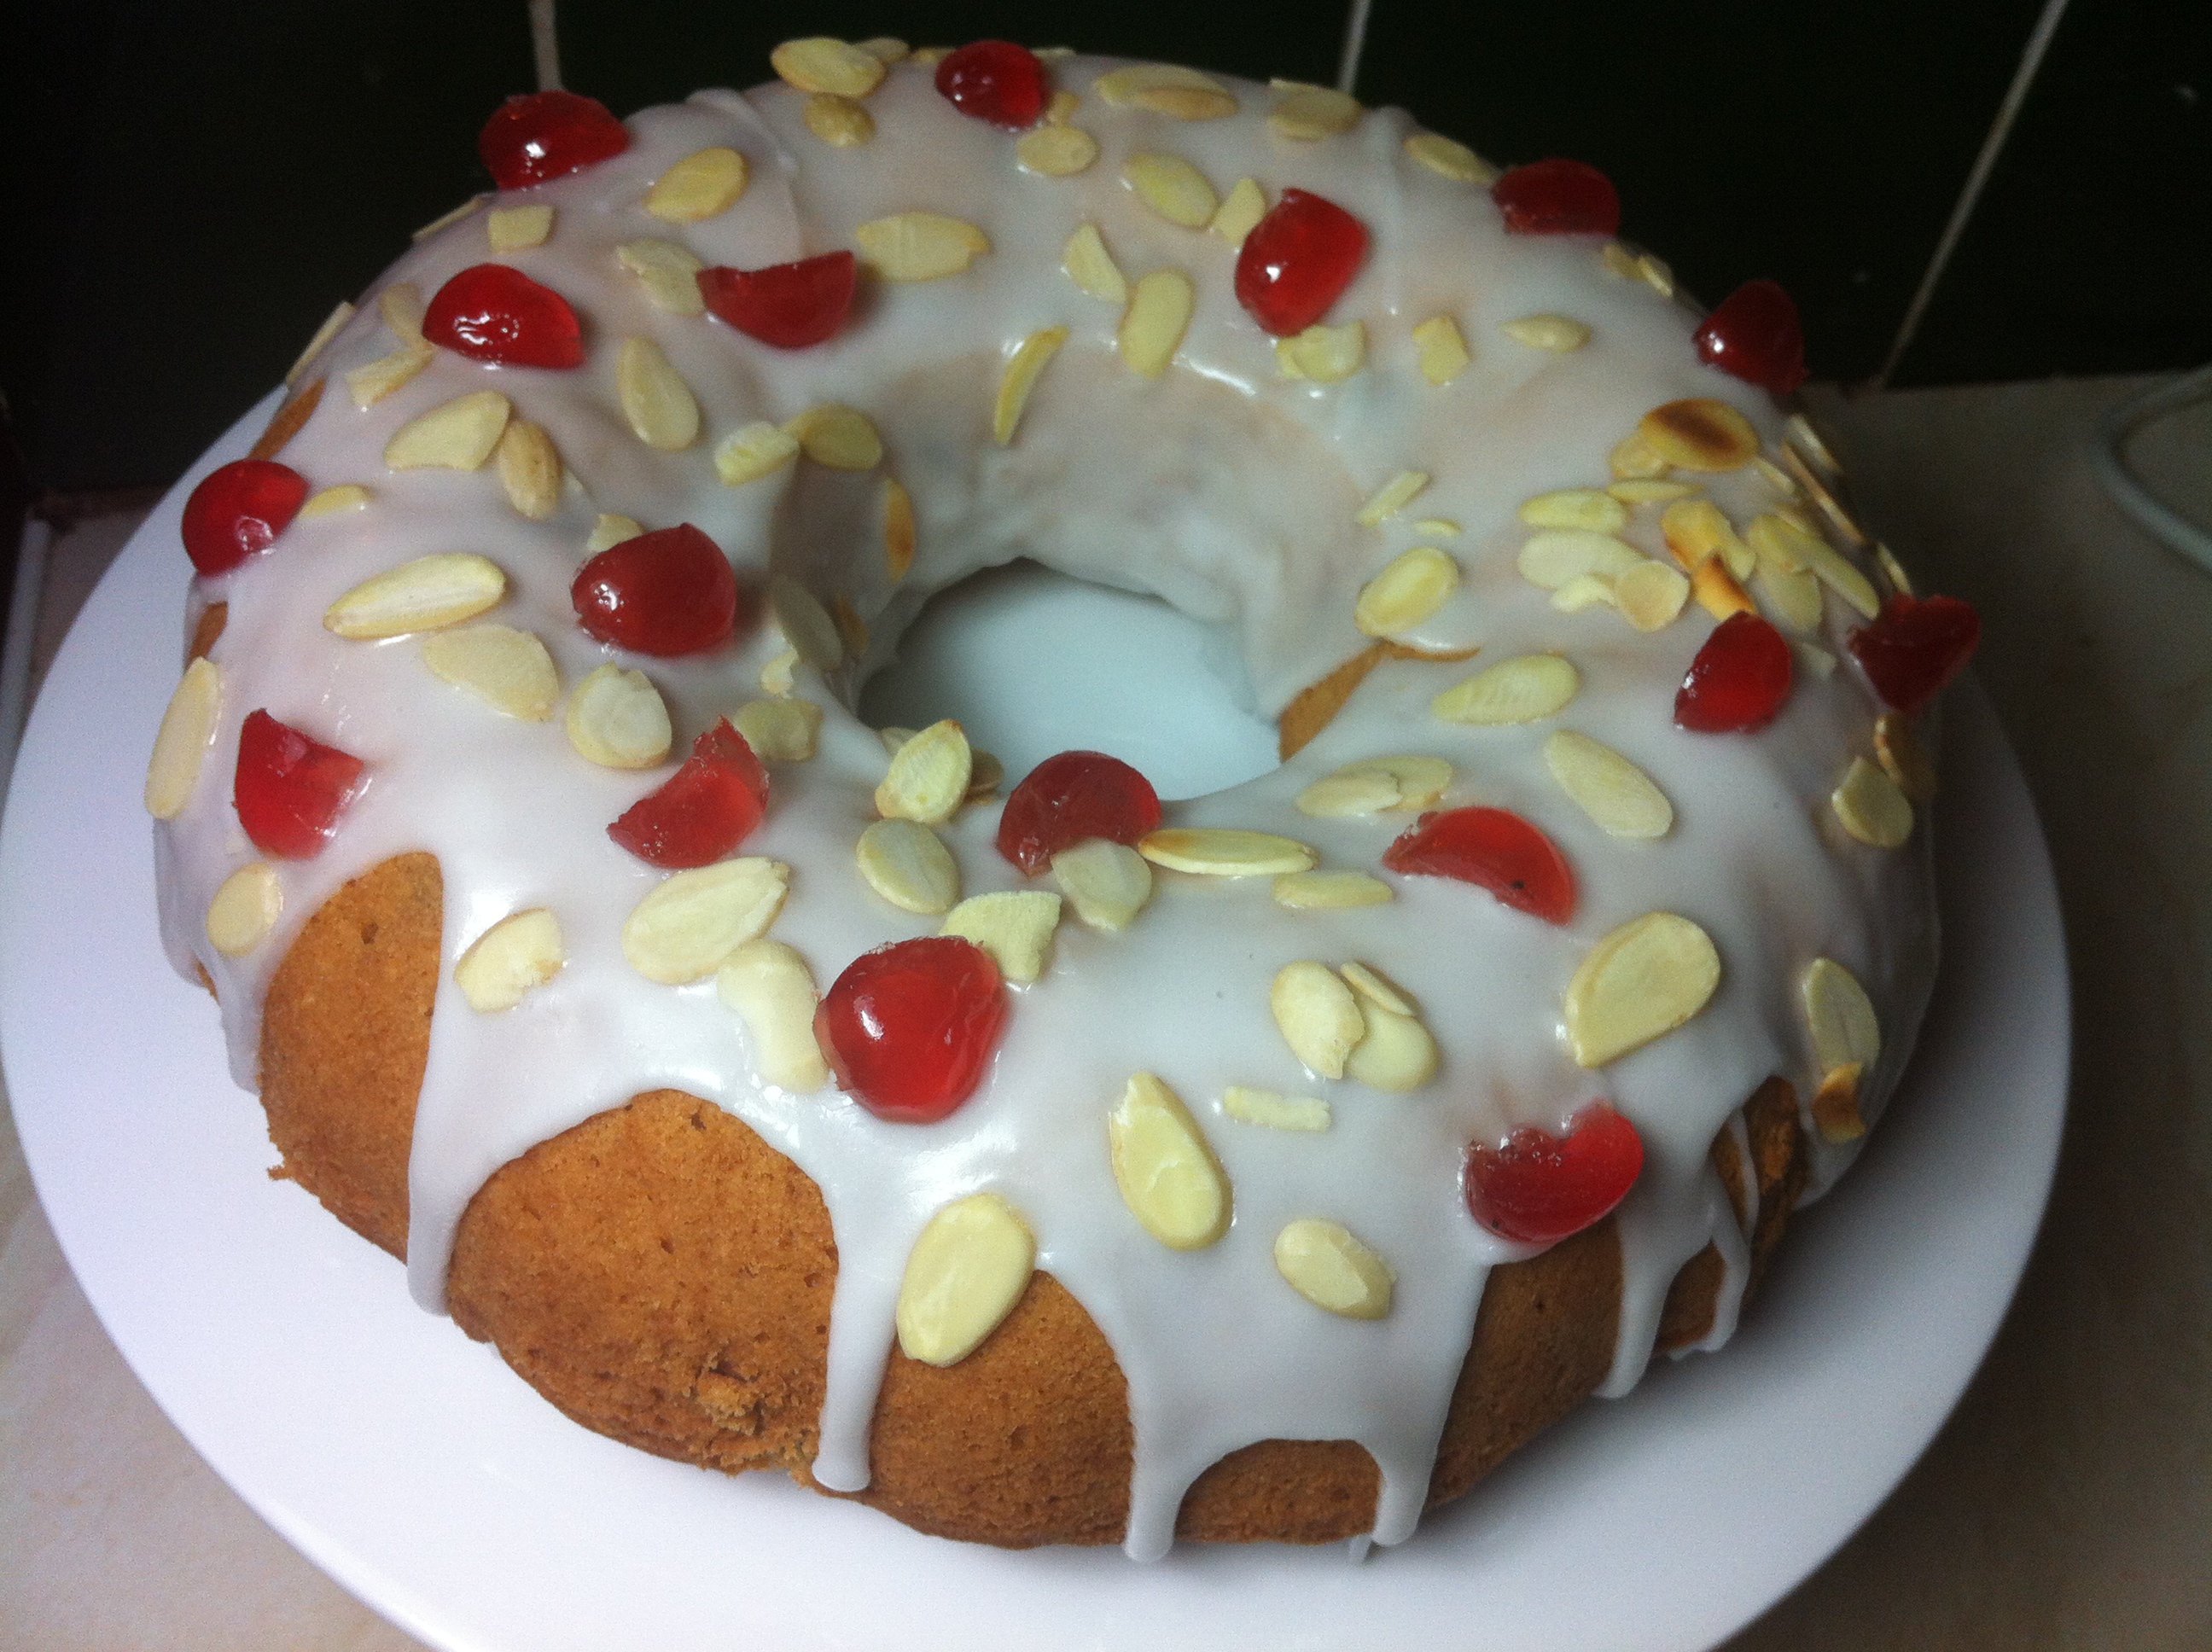 Homemade cherry bundt cake